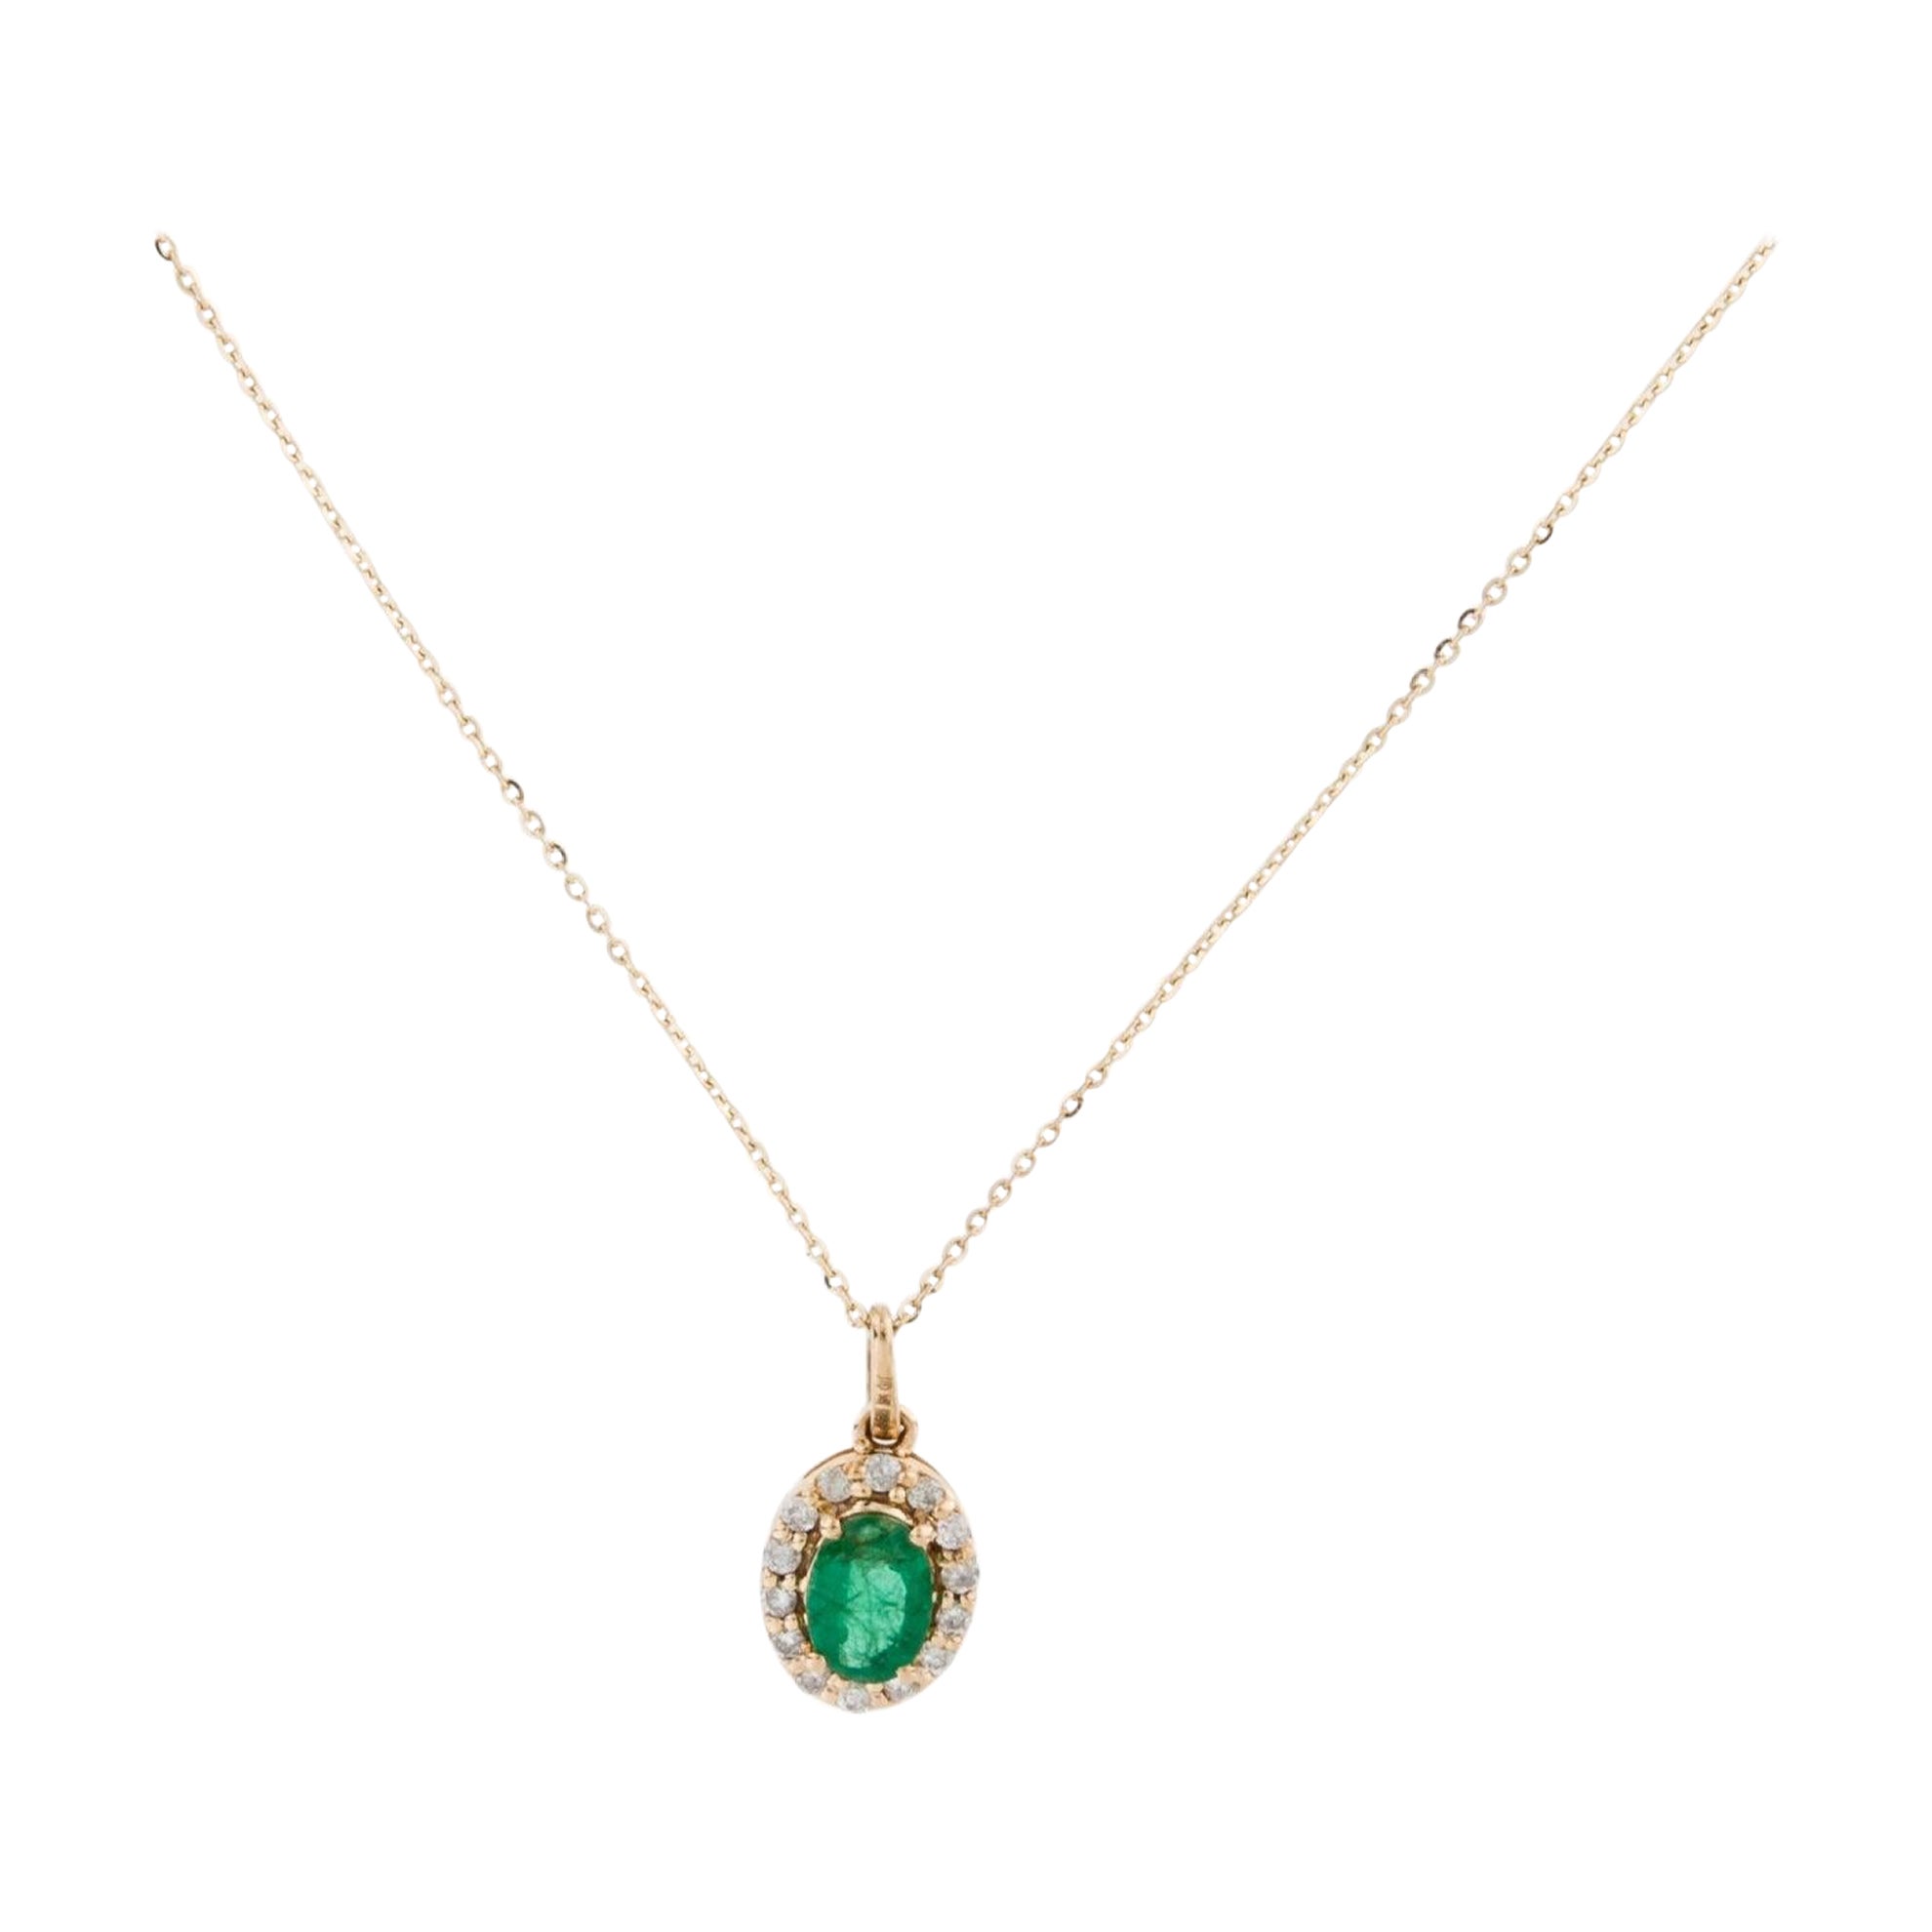 14K Emerald & Diamond Pendant Necklace: Exquisite Luxury Statement Jewelry Piece